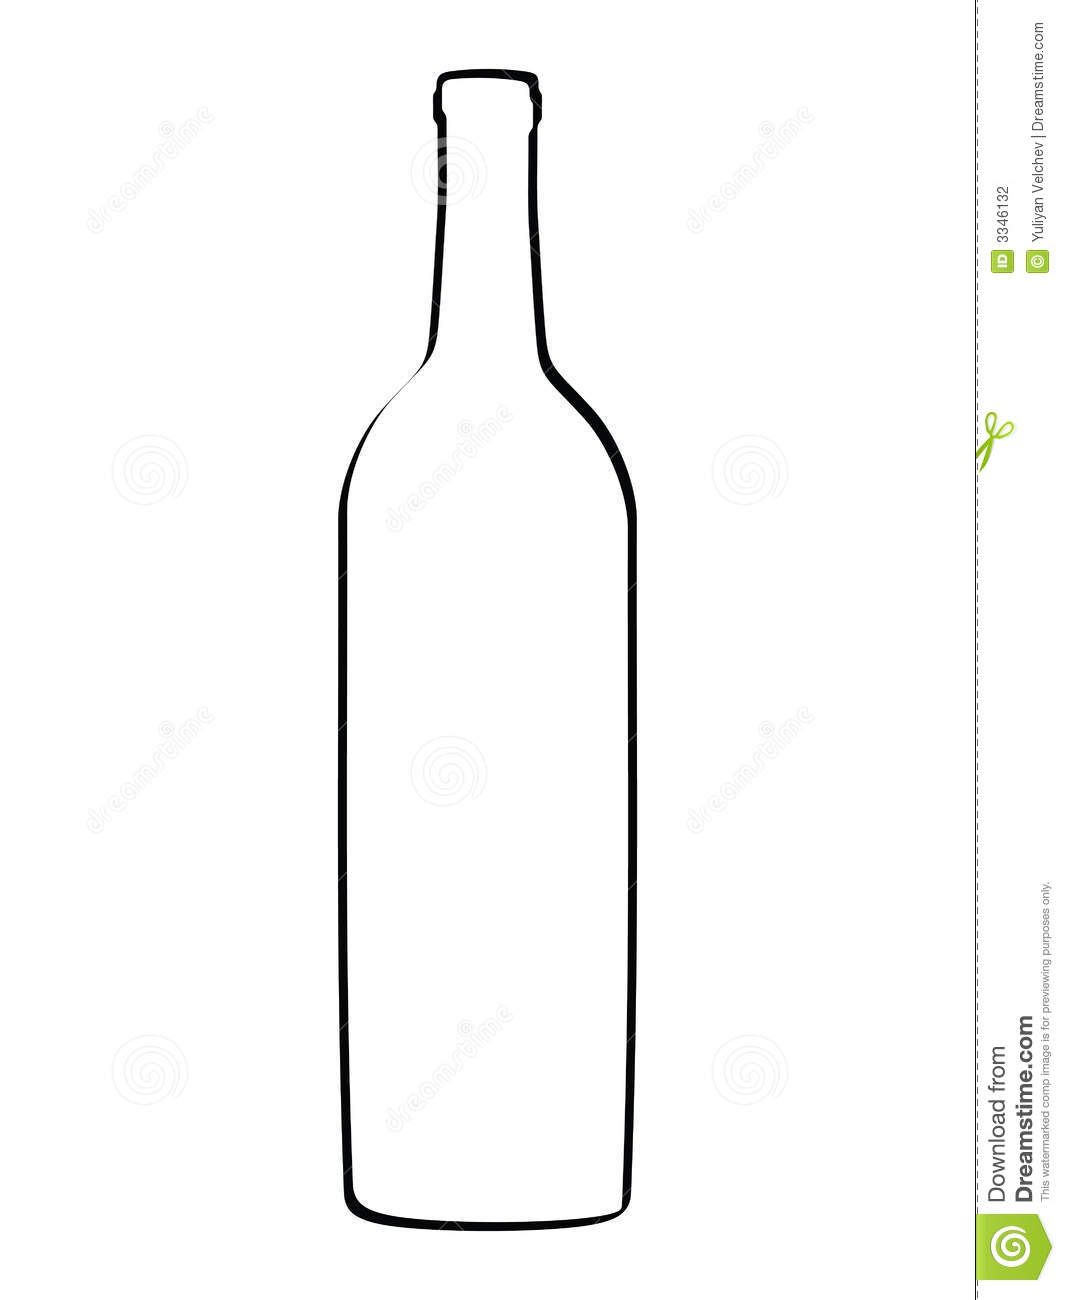 Bottle outline